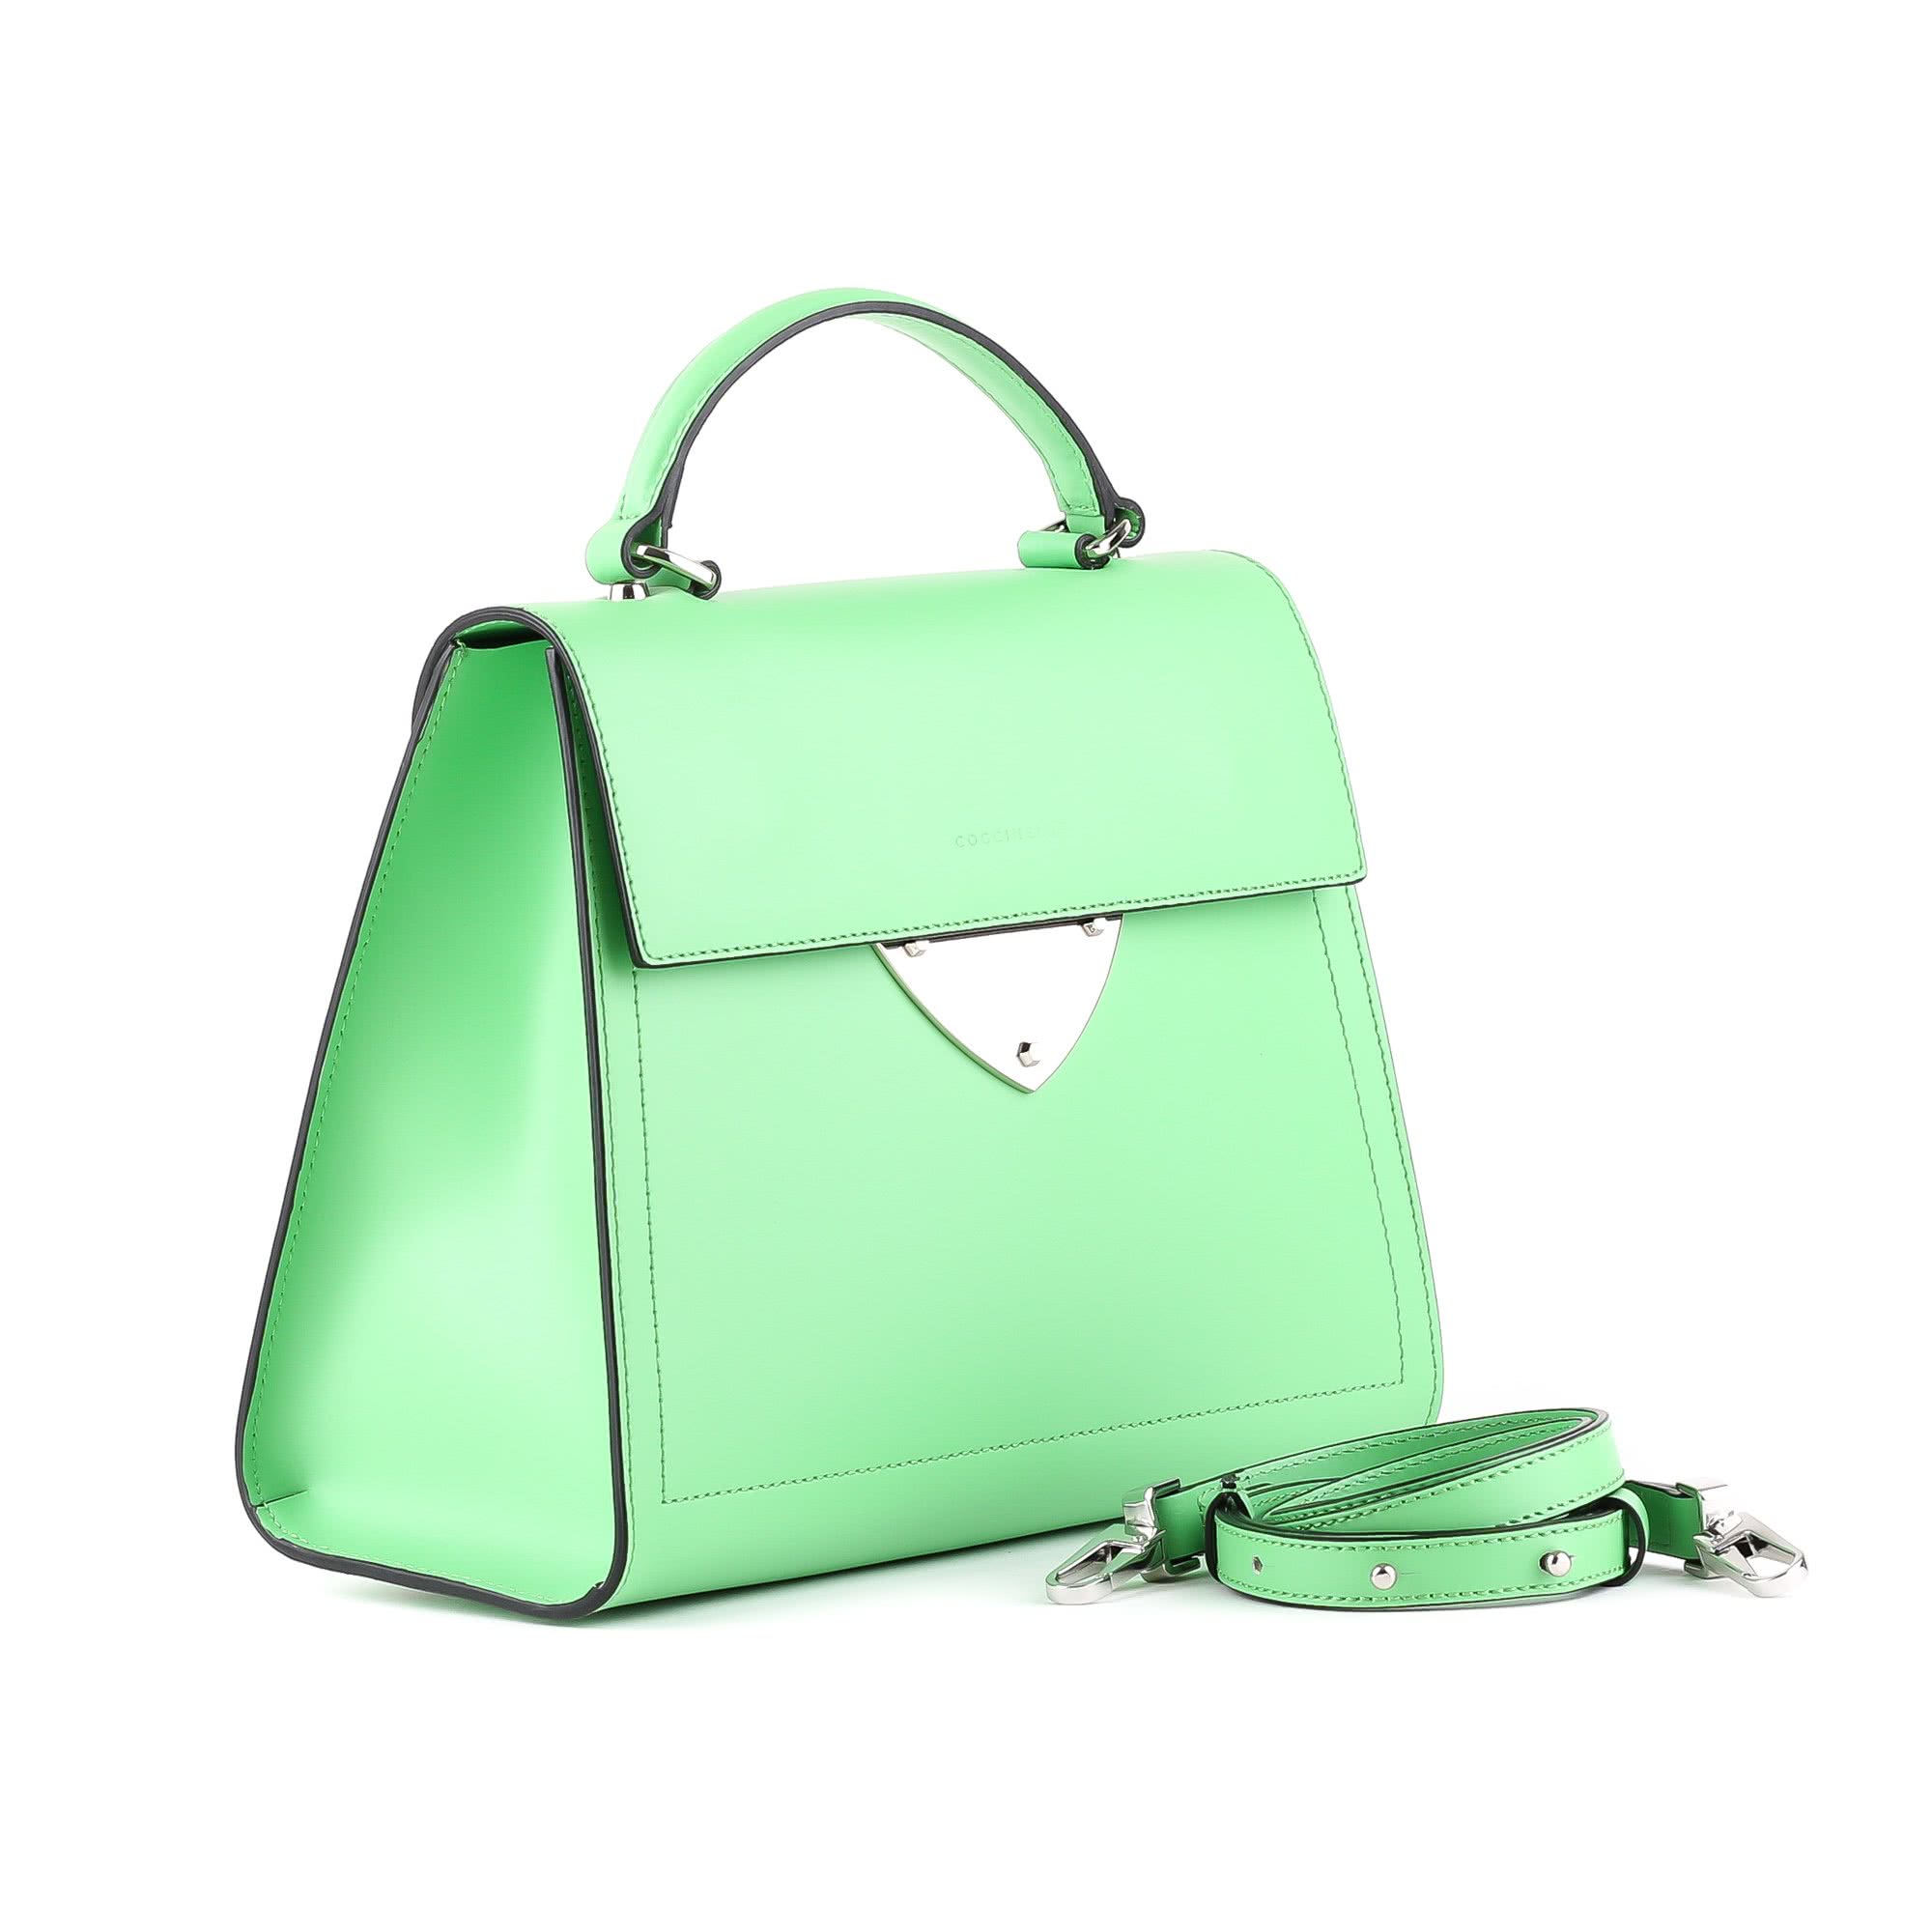 Кочинелли интернет магазин. Сумка Coccinelle зеленая. Coccinelle рюкзак Lea зеленый.